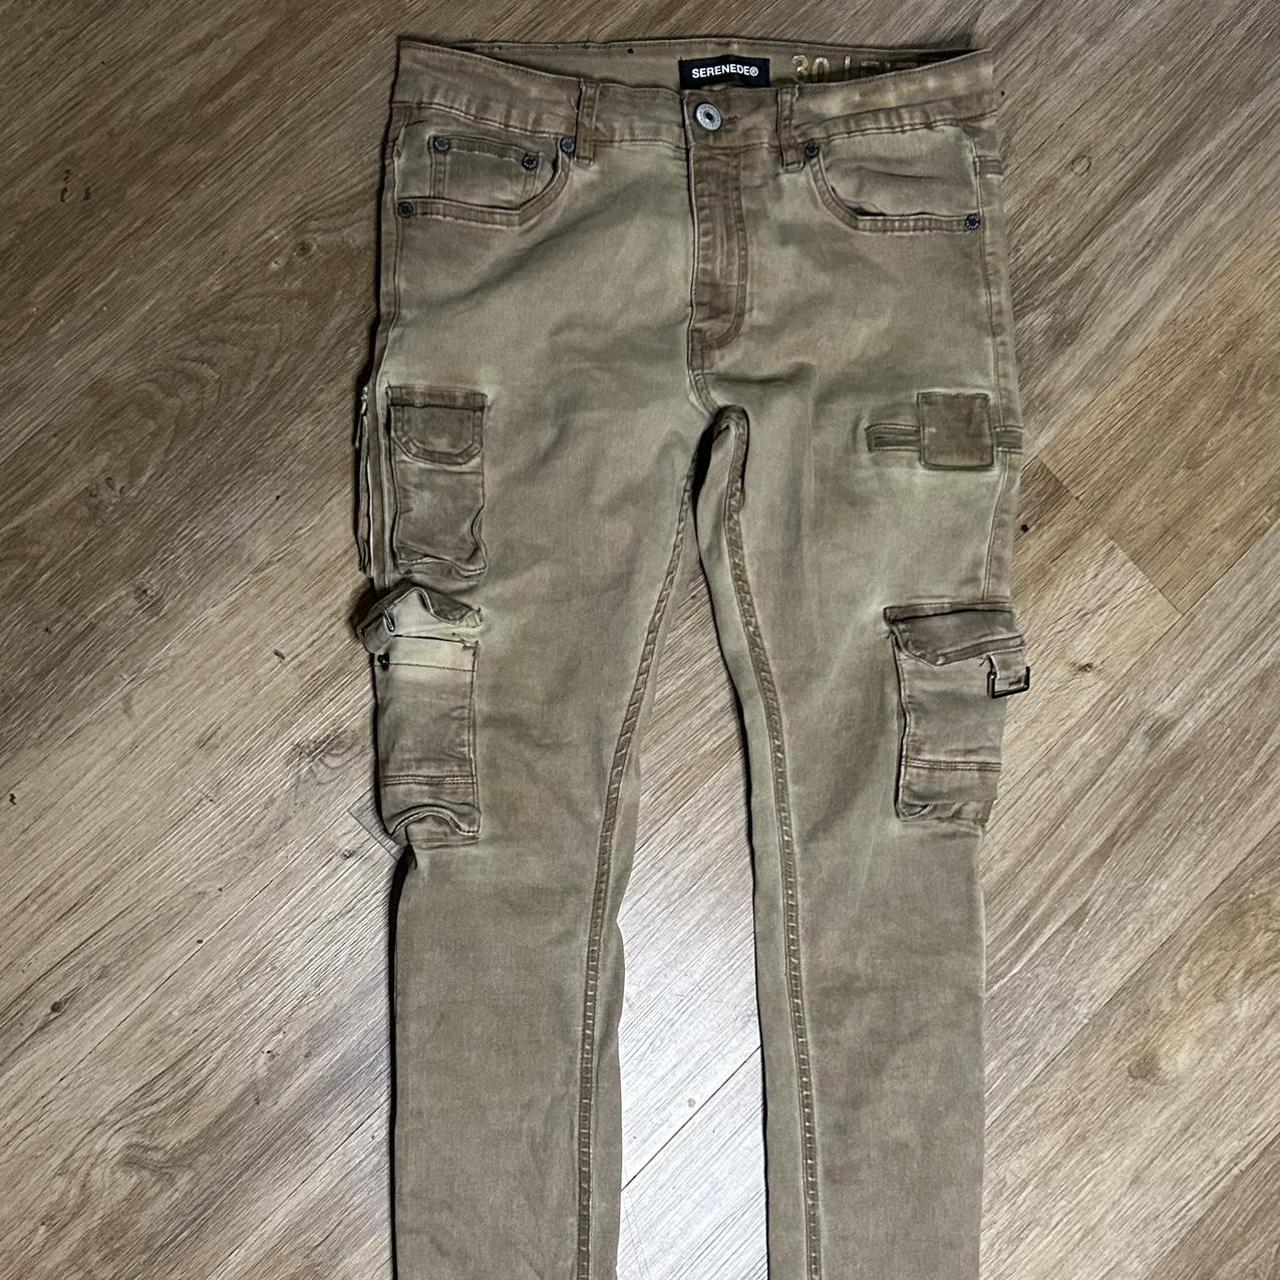 khaki cargo serenade jeans skinny fit size 30 - Depop